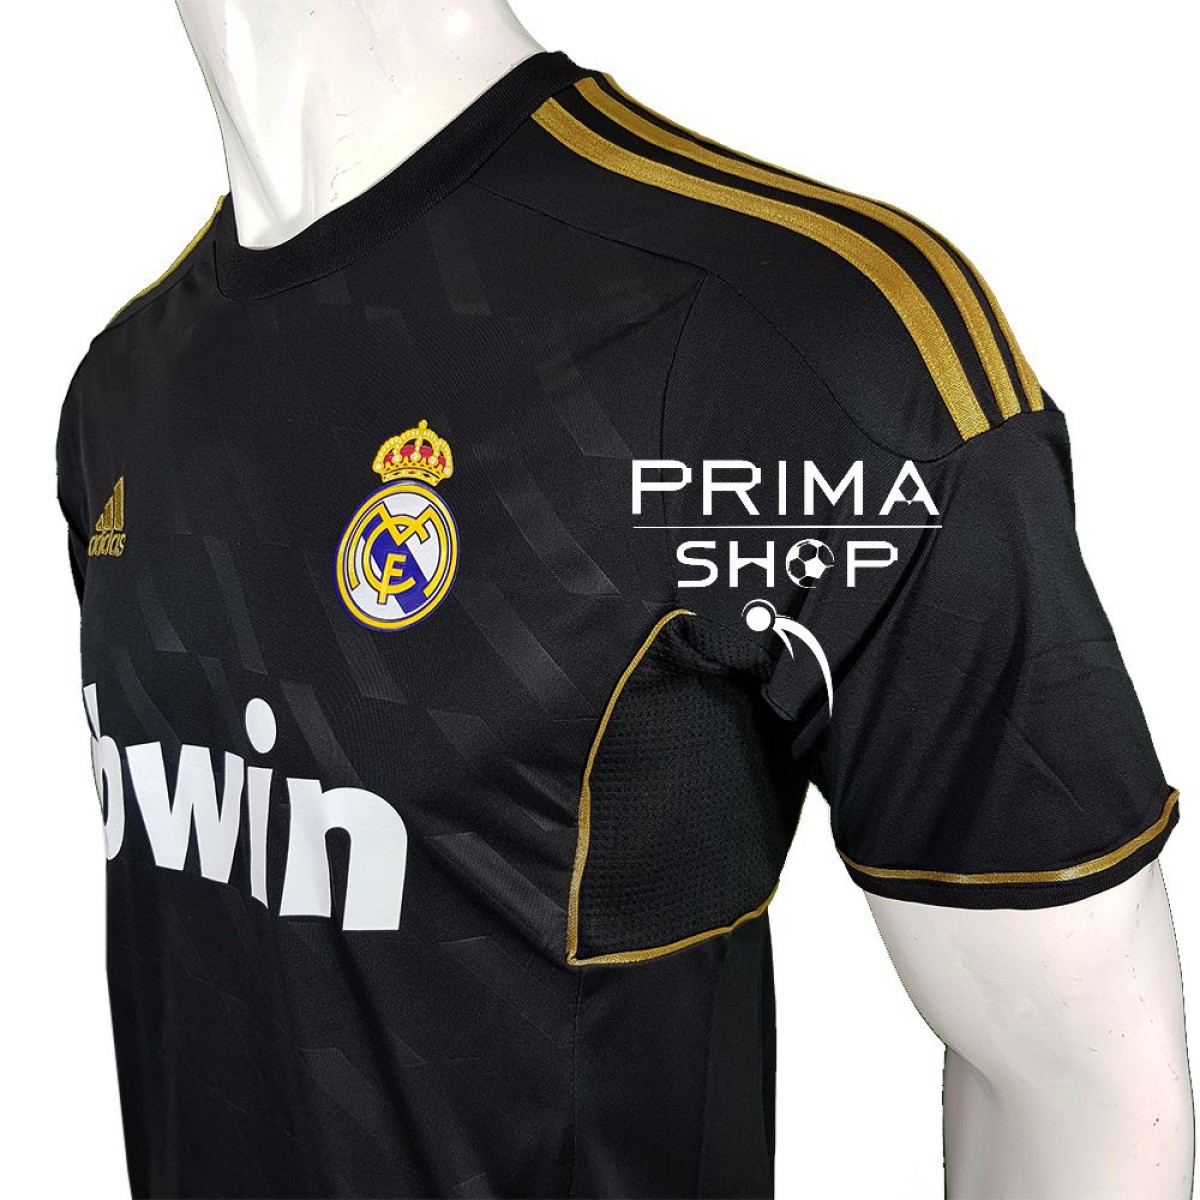 لباس کلاسیک دوم رئال مادرید 2012